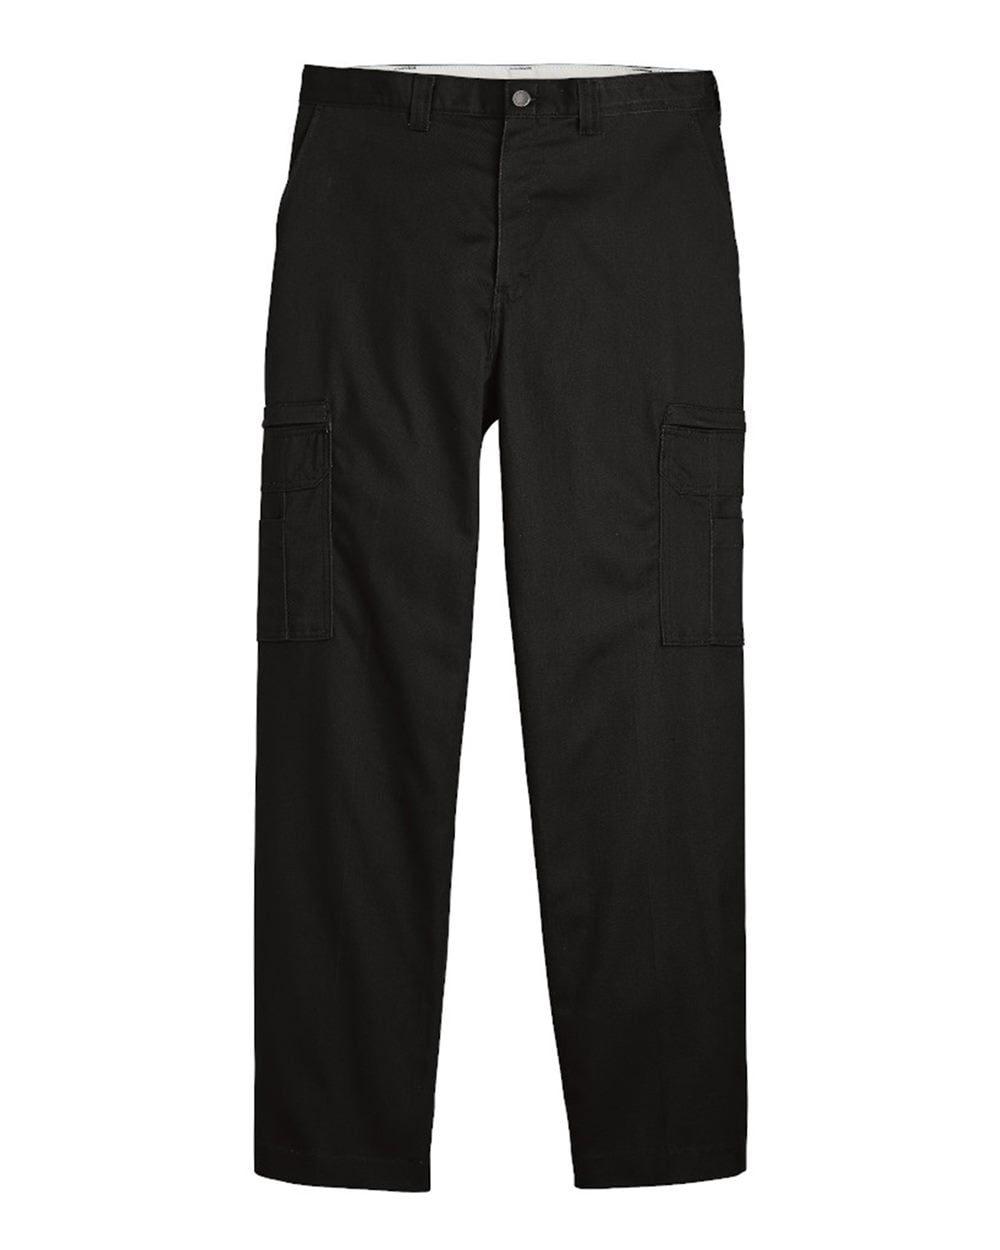 Dickies LP39 Industrial Cotton Cargo Pants - Black - 39 Unhemmed - 34W